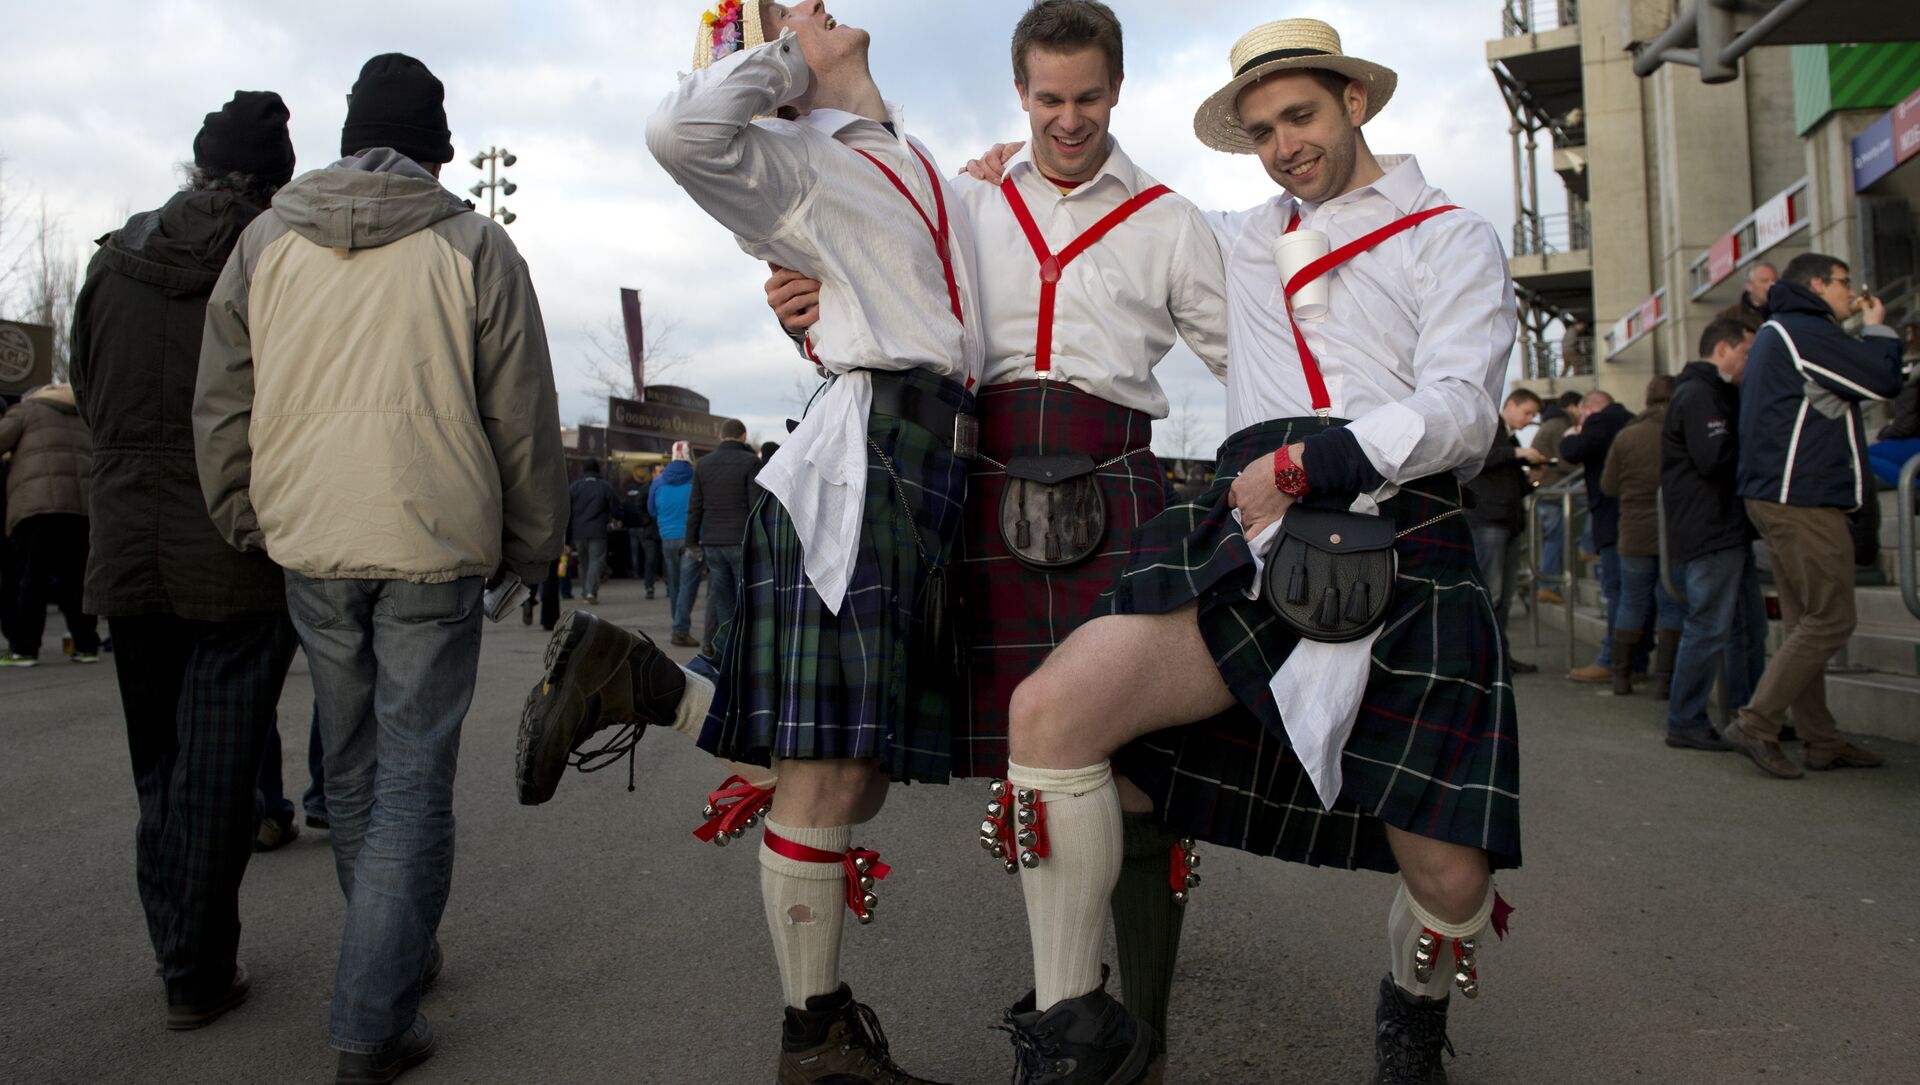 What does a Scotsman wear under his kilt?